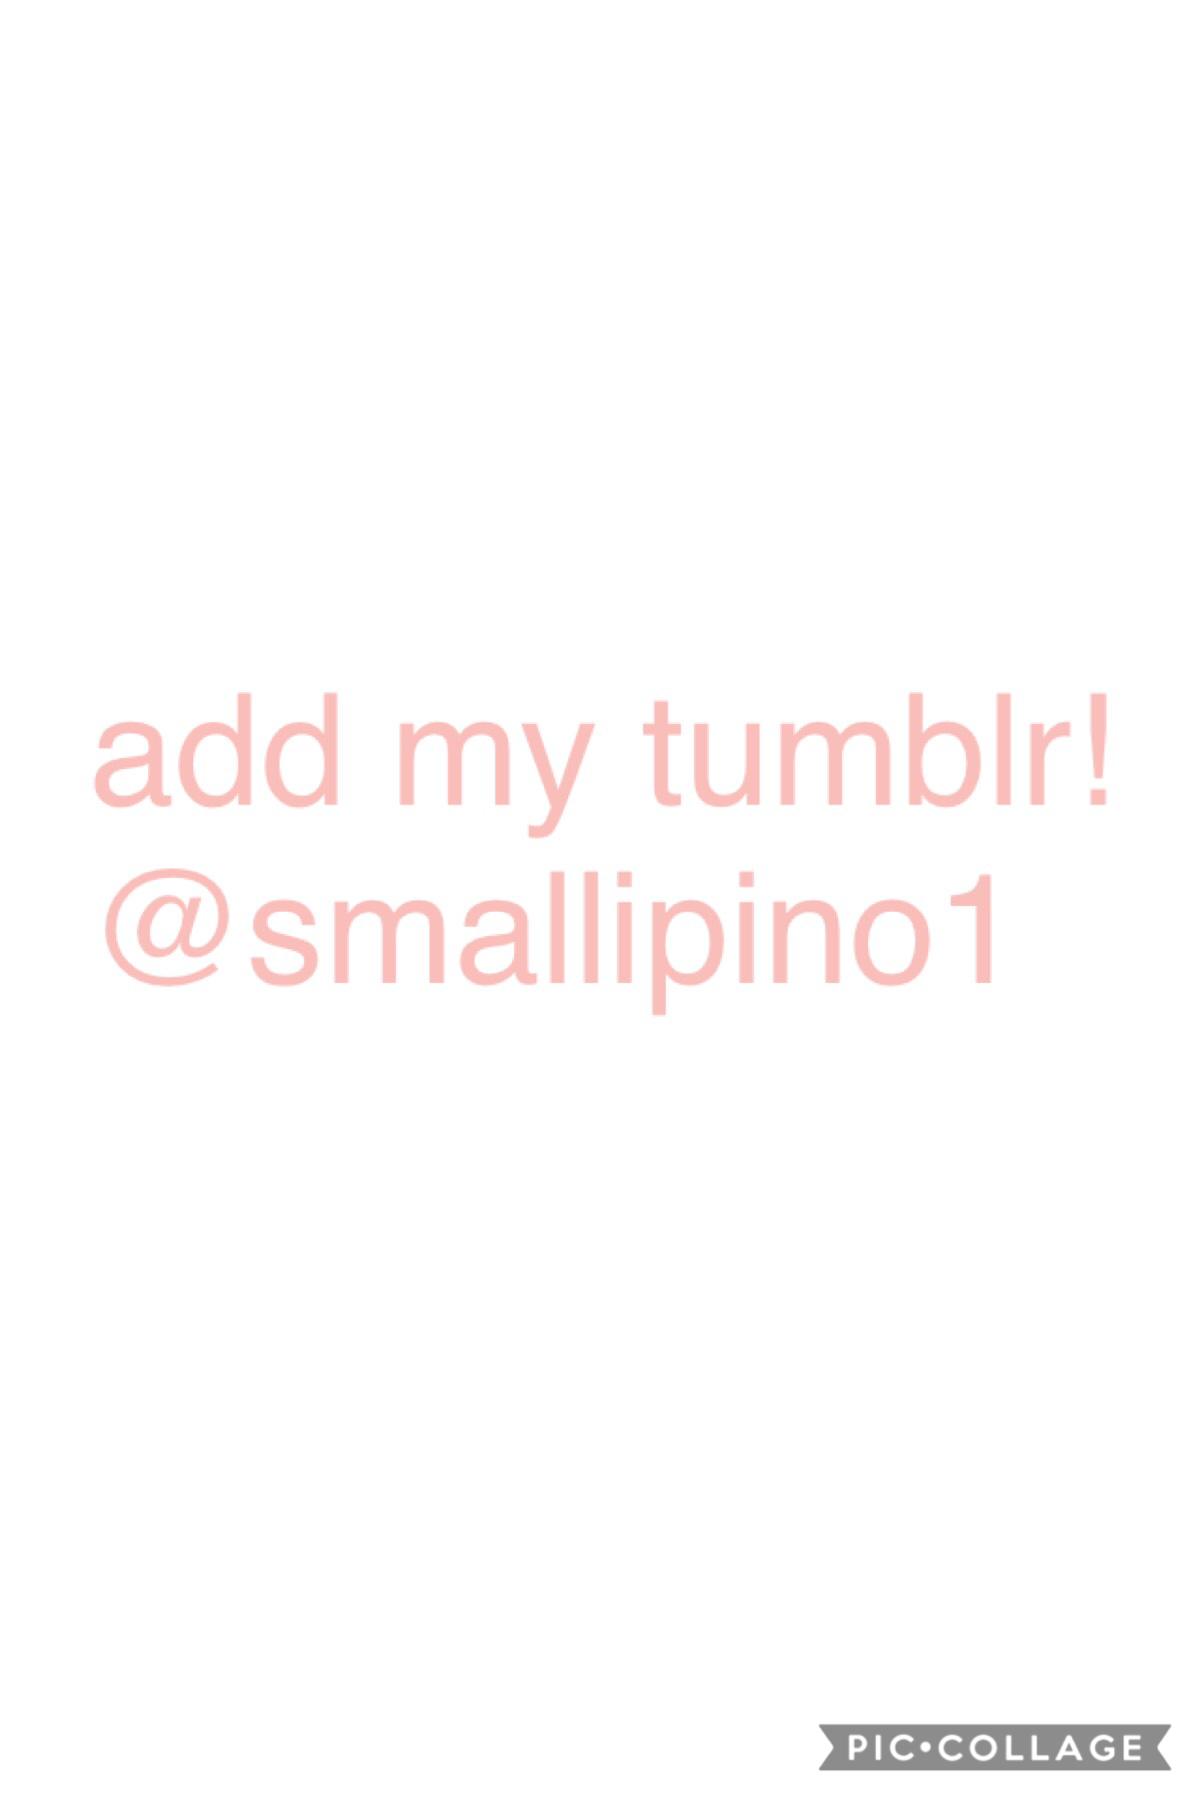 💮T.A.P💮

03.28.19
Tumblr!

add up my tumblr guys (dead)
@smallipino1